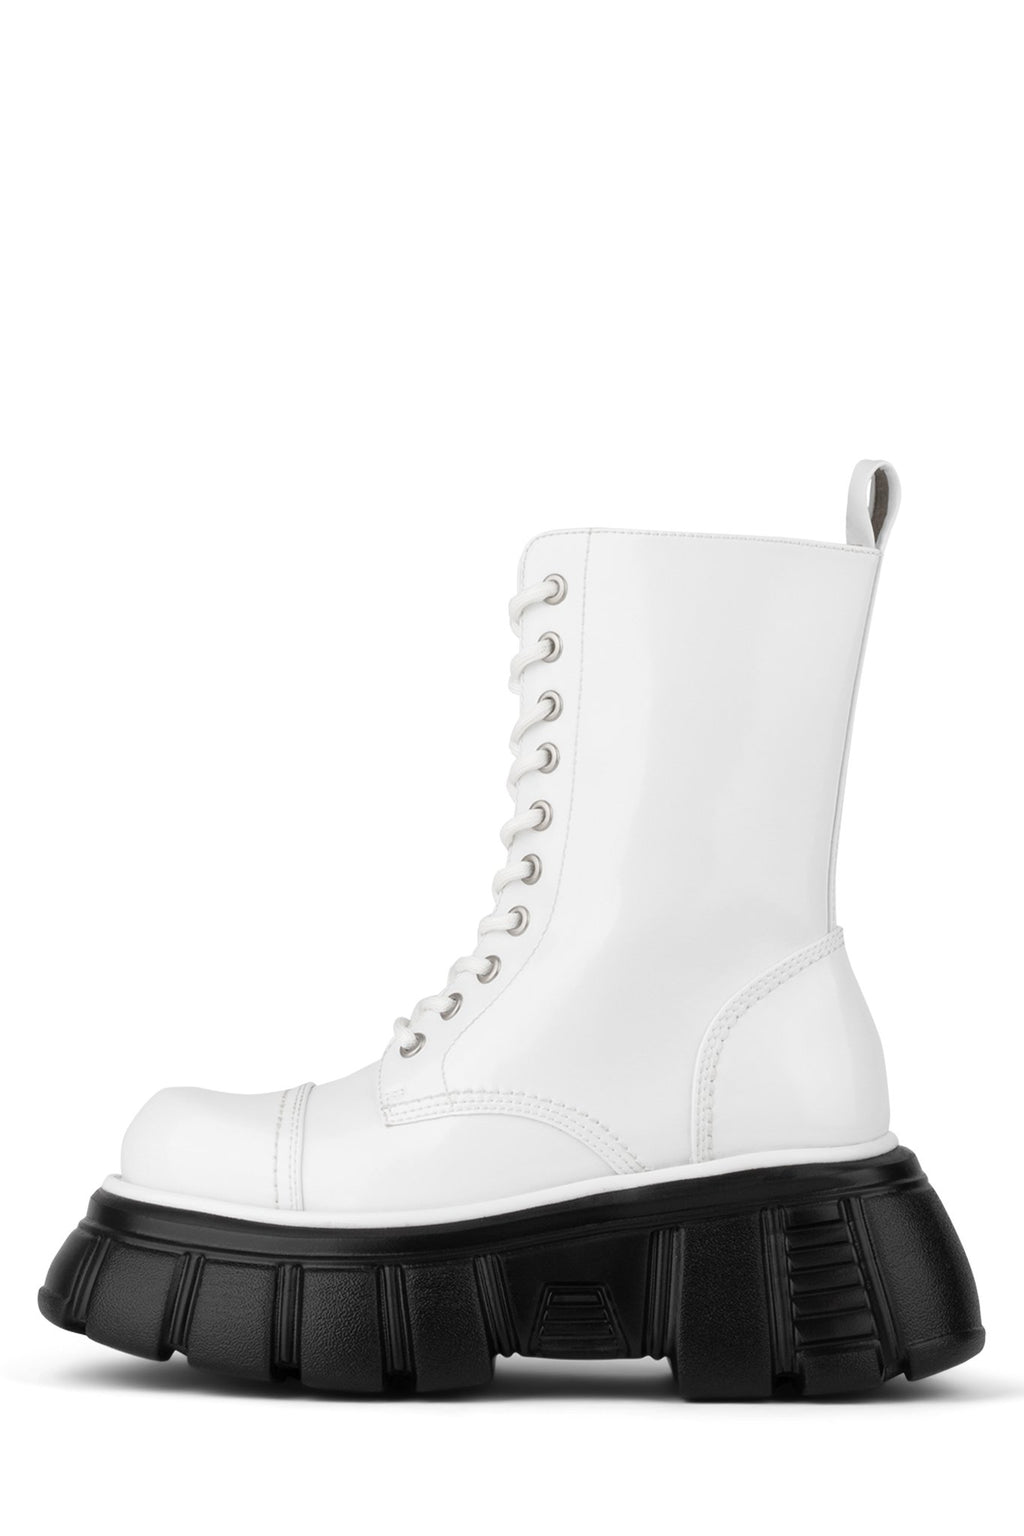 white platform boots 7s